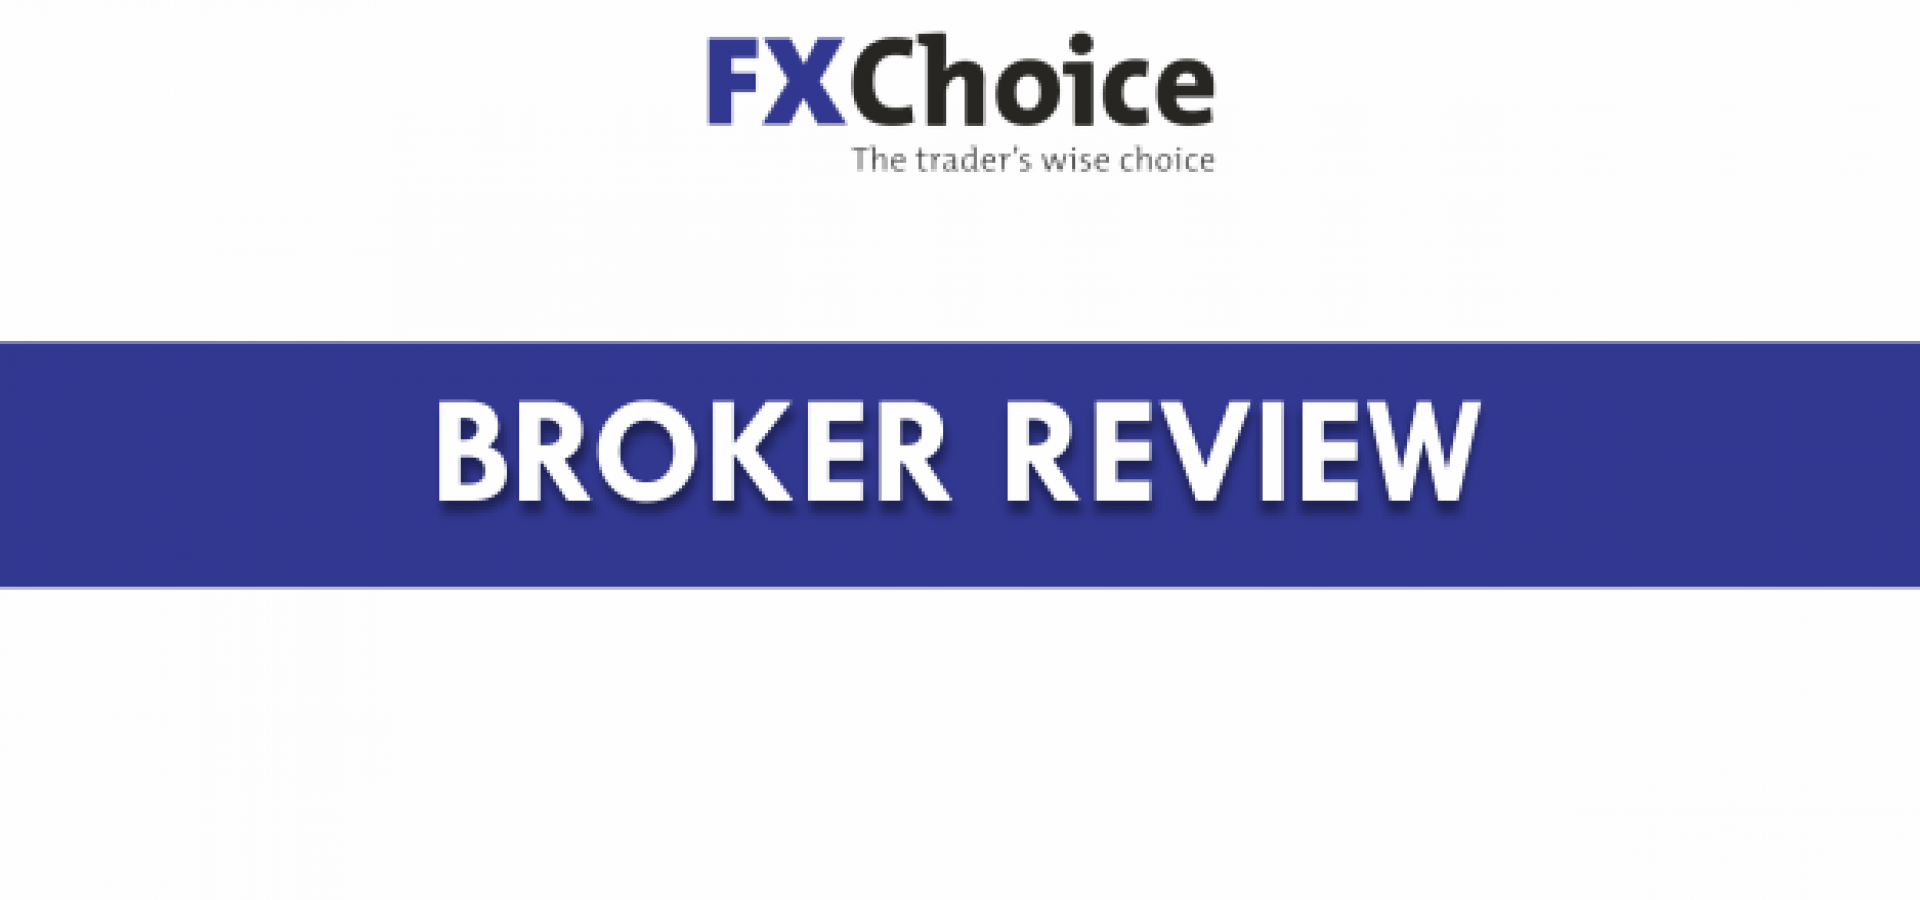 FXChoice Broker Review